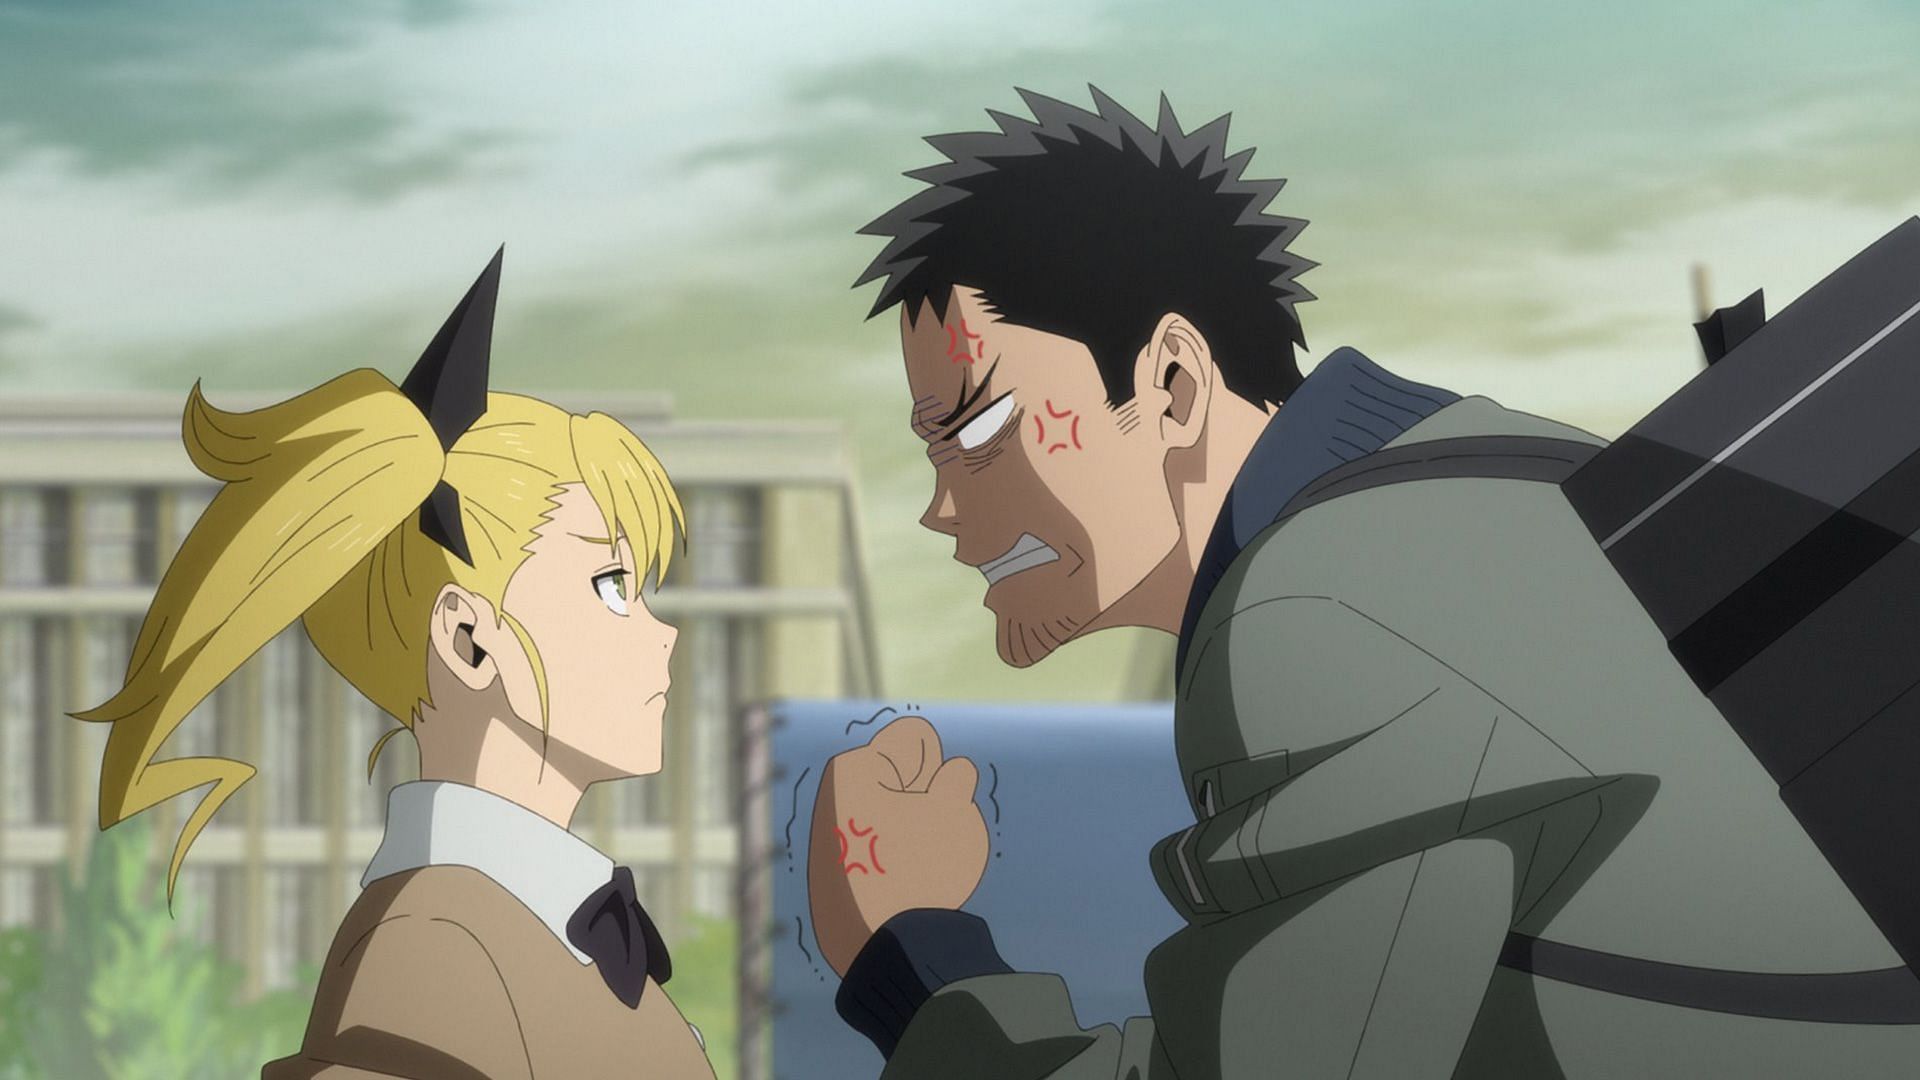 Kaiju No. 8 episode 3 quickly establishes Kafka and Kikoru as friendly rivals (Image via Production I.G)